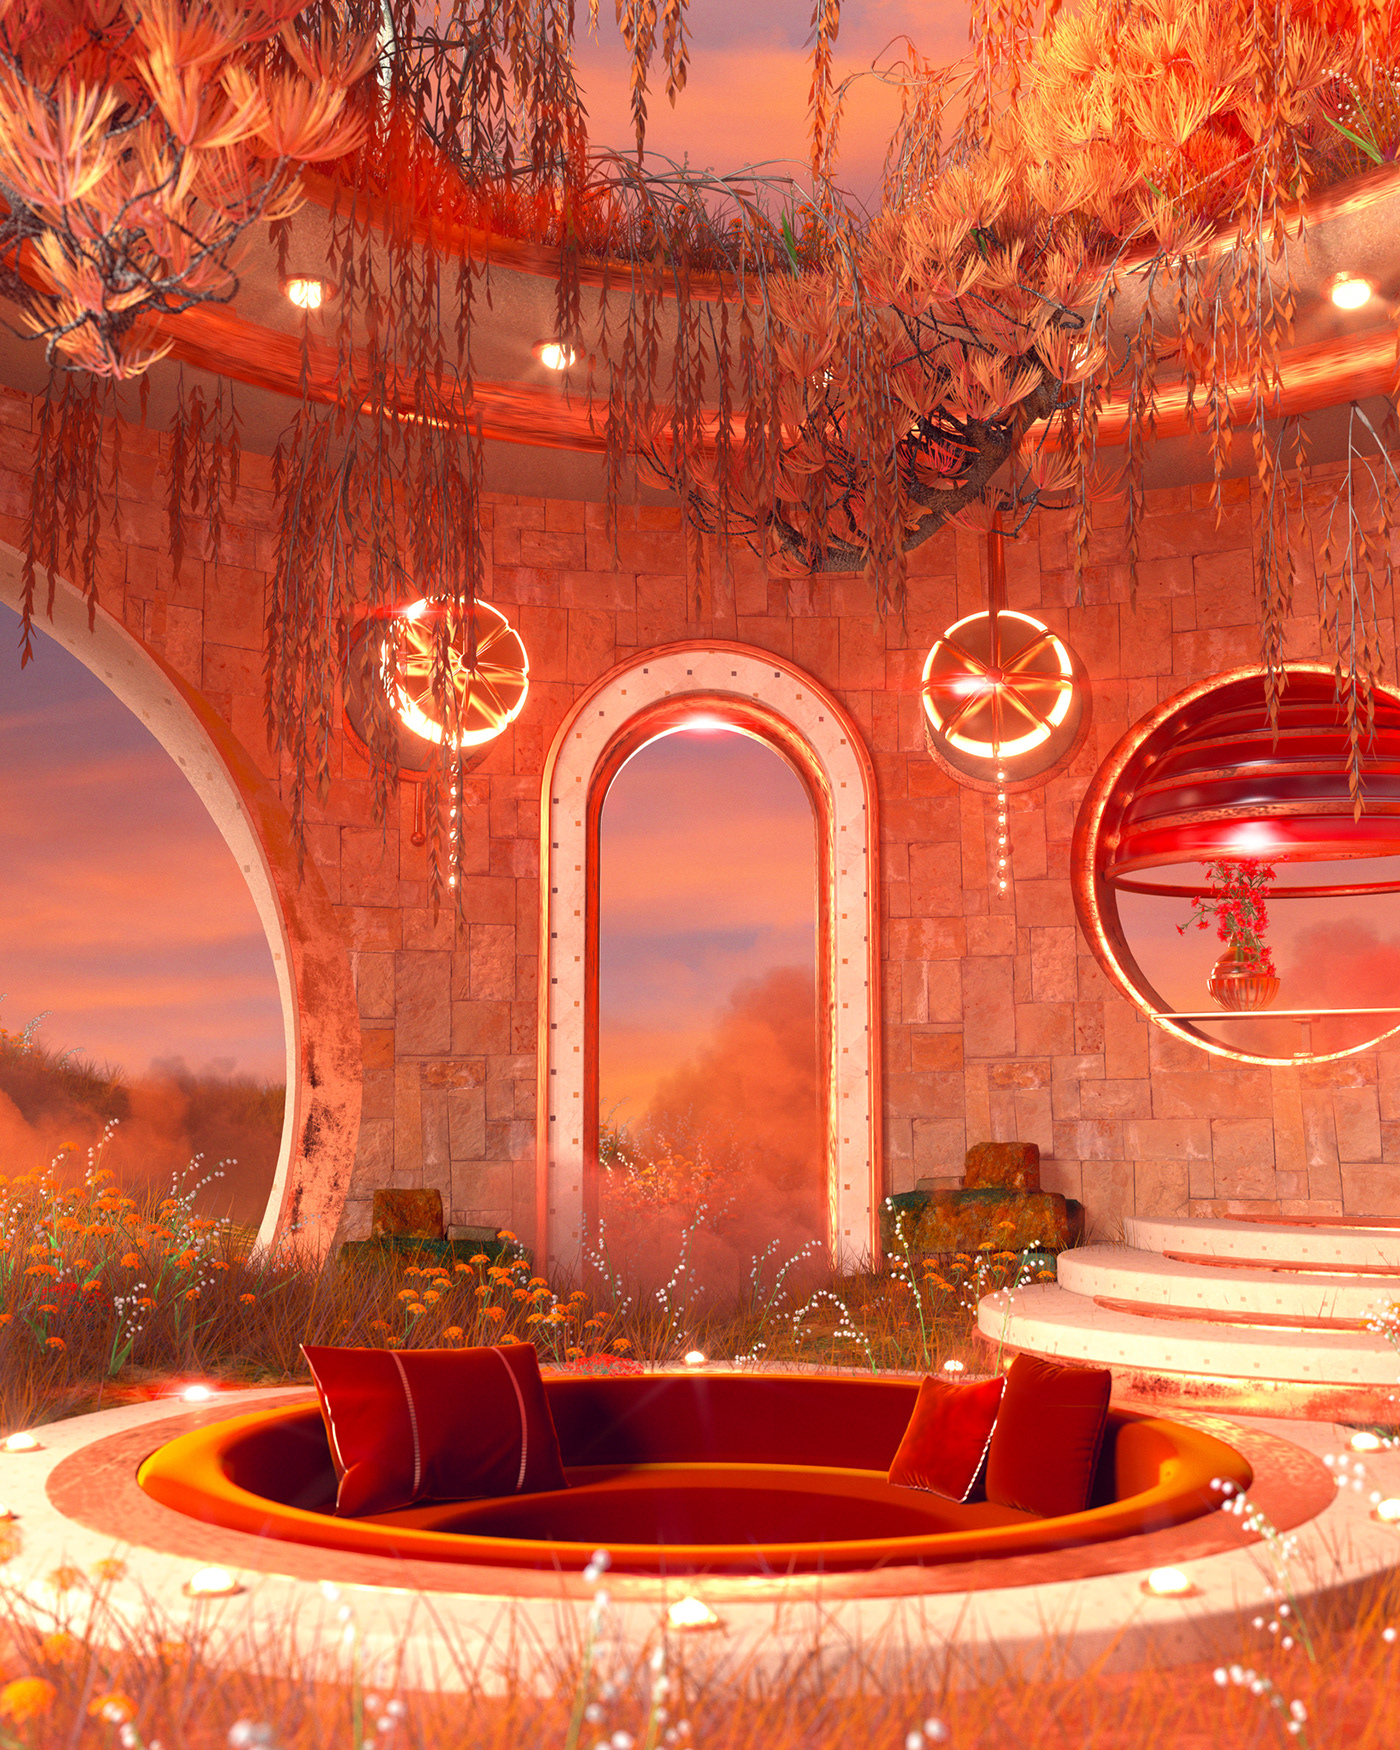 3D architecture cinema 4d concept art Digital Art  dreamscape Dreamspace environment Interior Space design